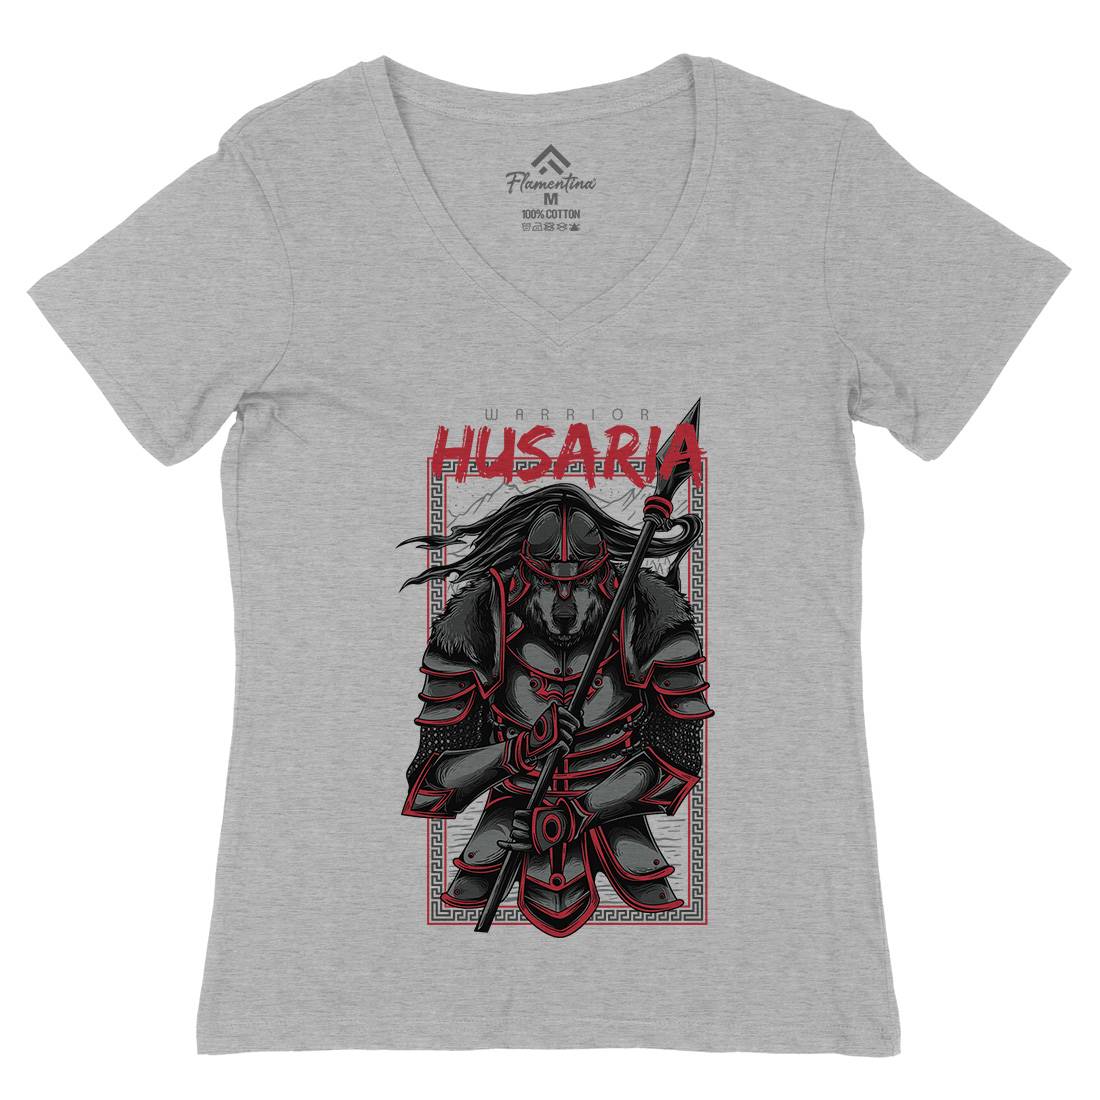 Husaria Womens Organic V-Neck T-Shirt Warriors D618